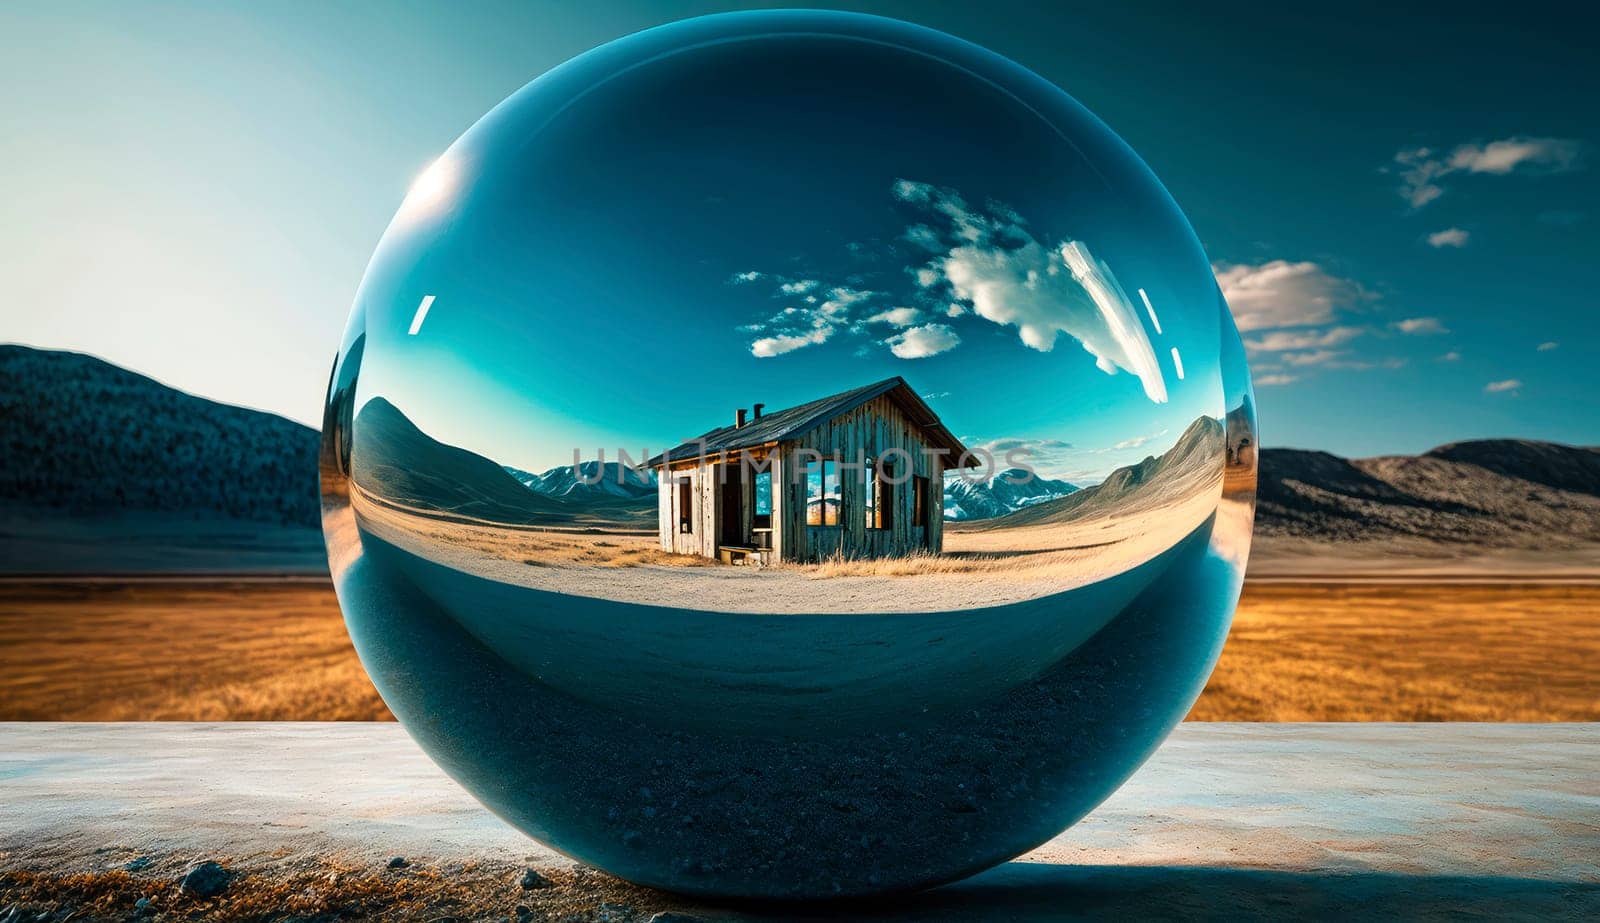 glass ball house. by yanadjana